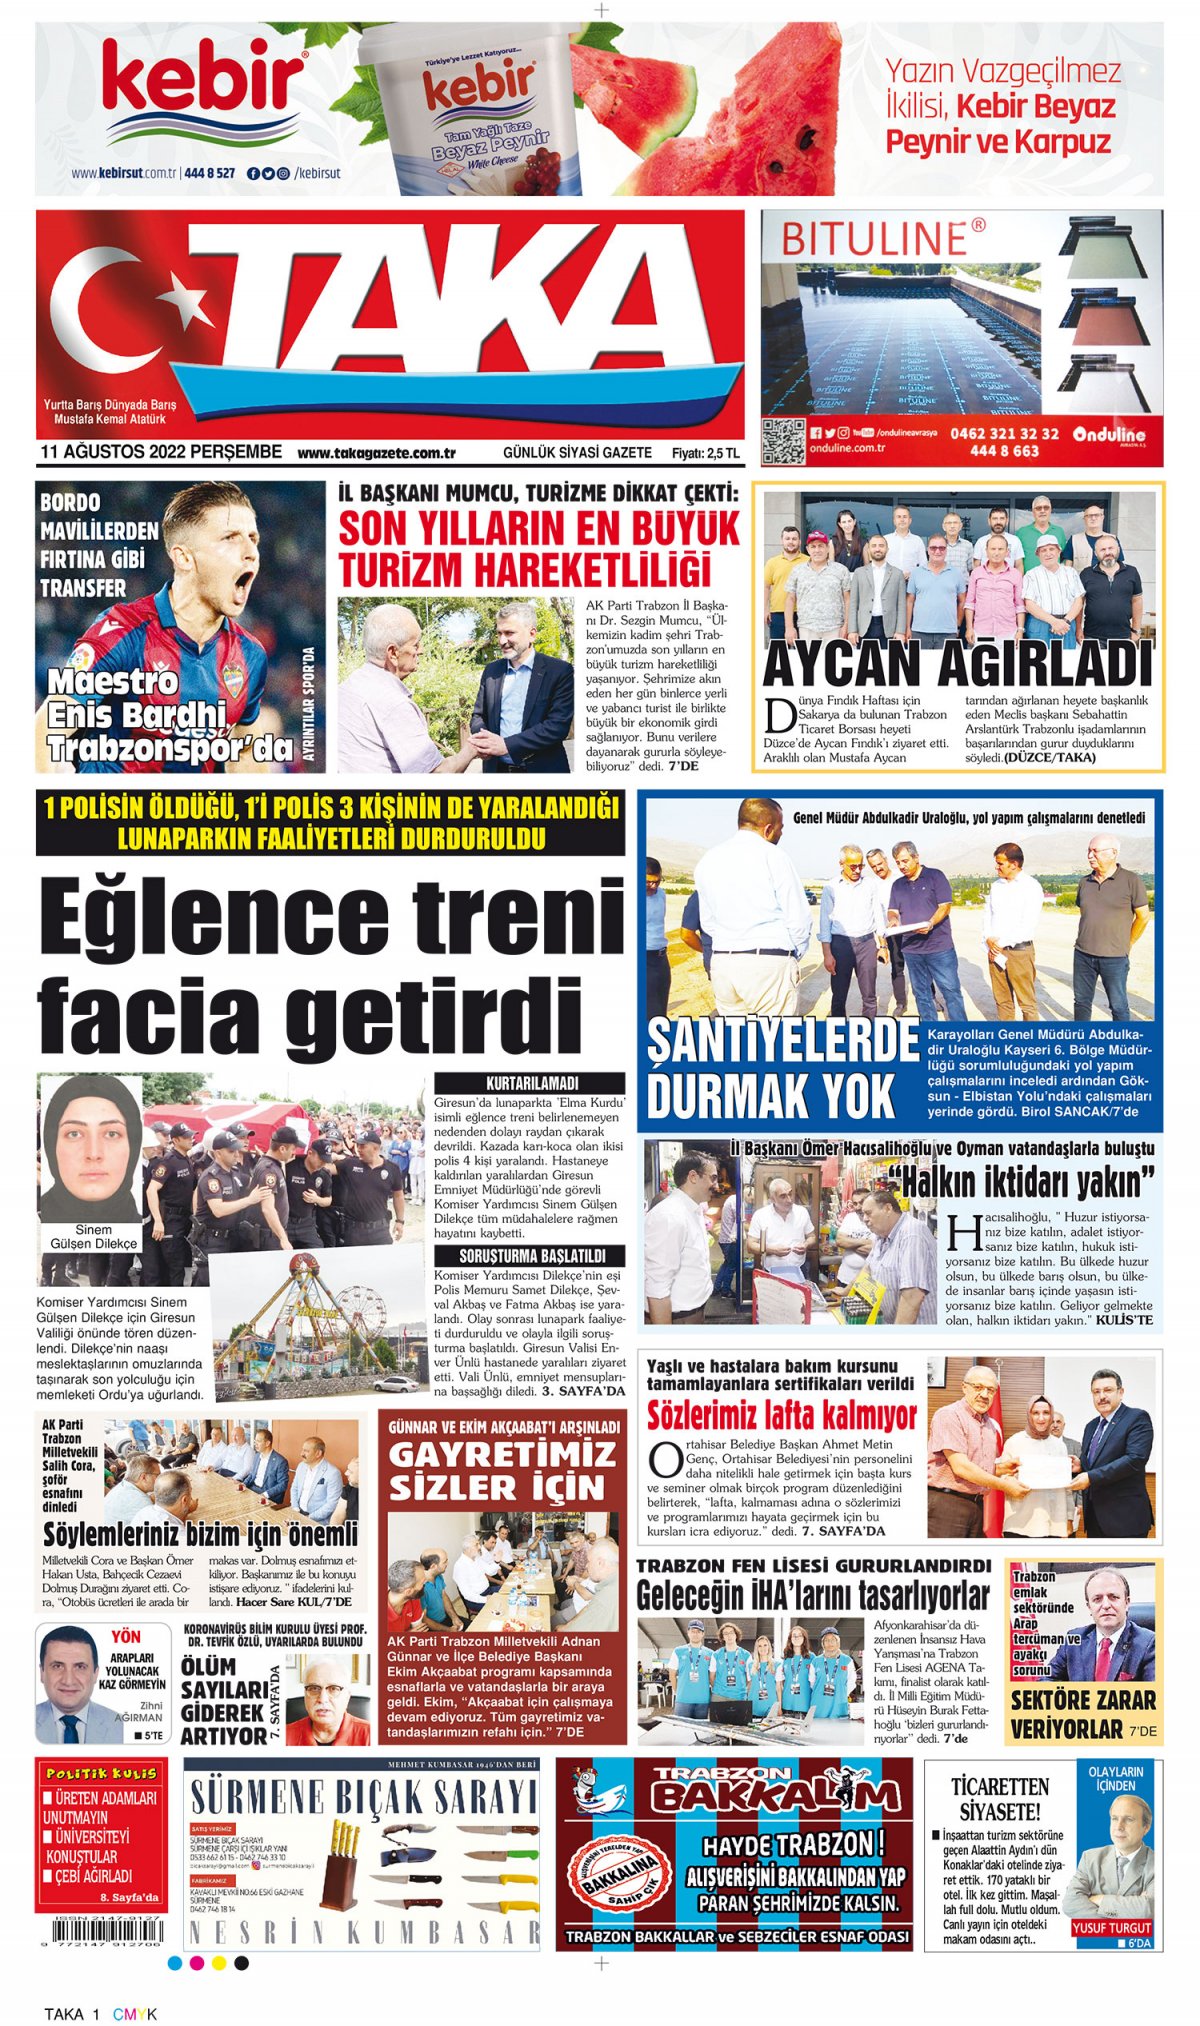 Taka Gazete - 11.08.2022 Manşeti